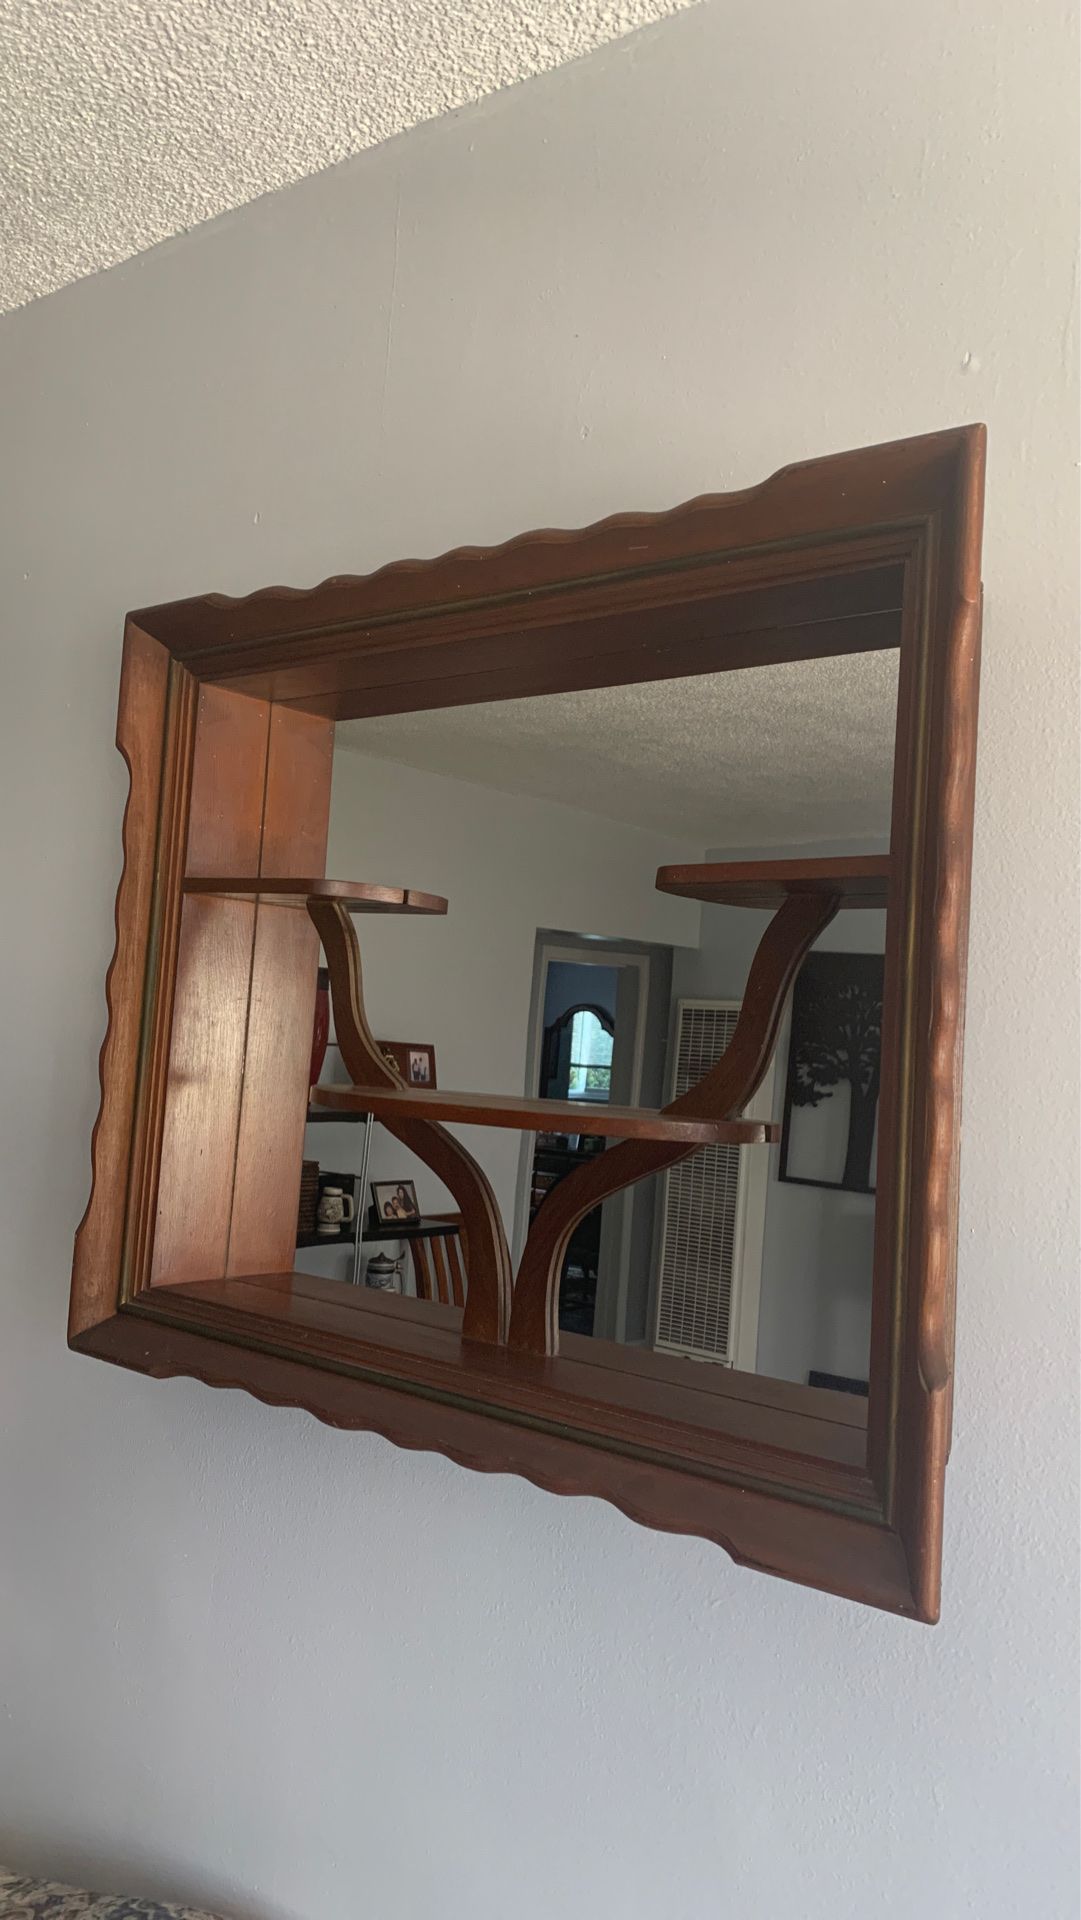 Antique mirror with decorative shelves $5